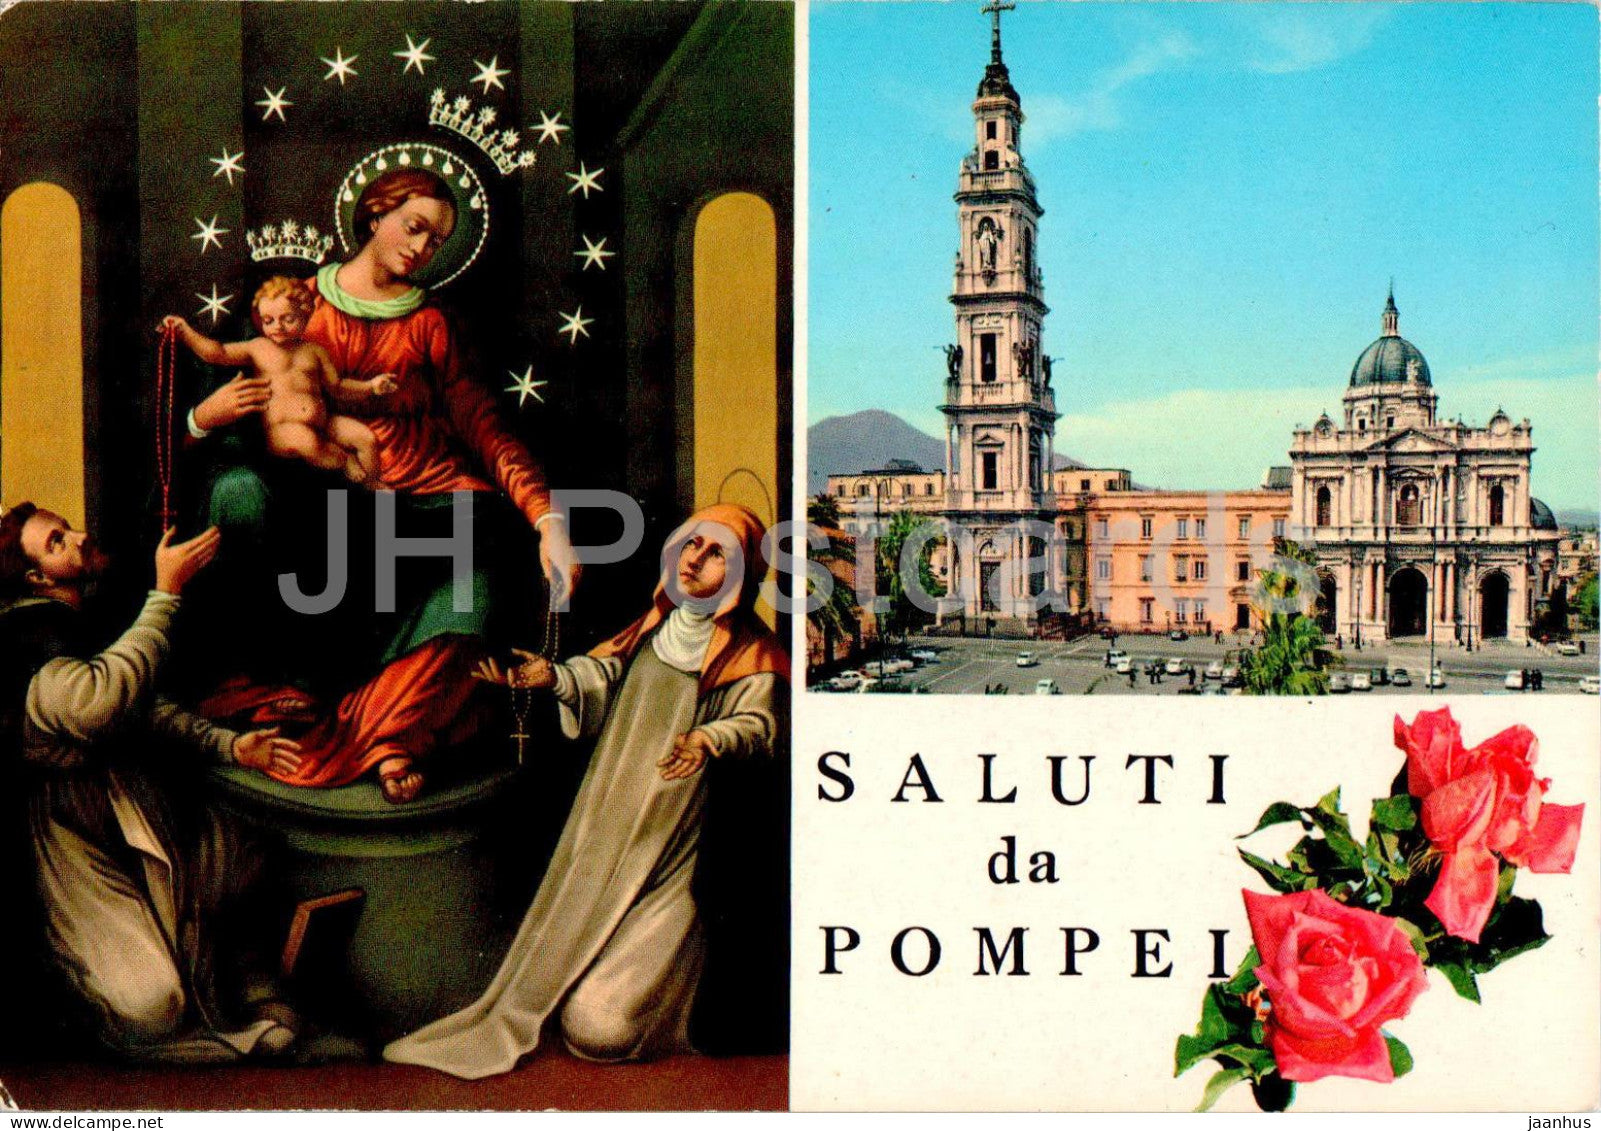 Saluti da Pompei - multiview - 139 - Italy - unused - JH Postcards